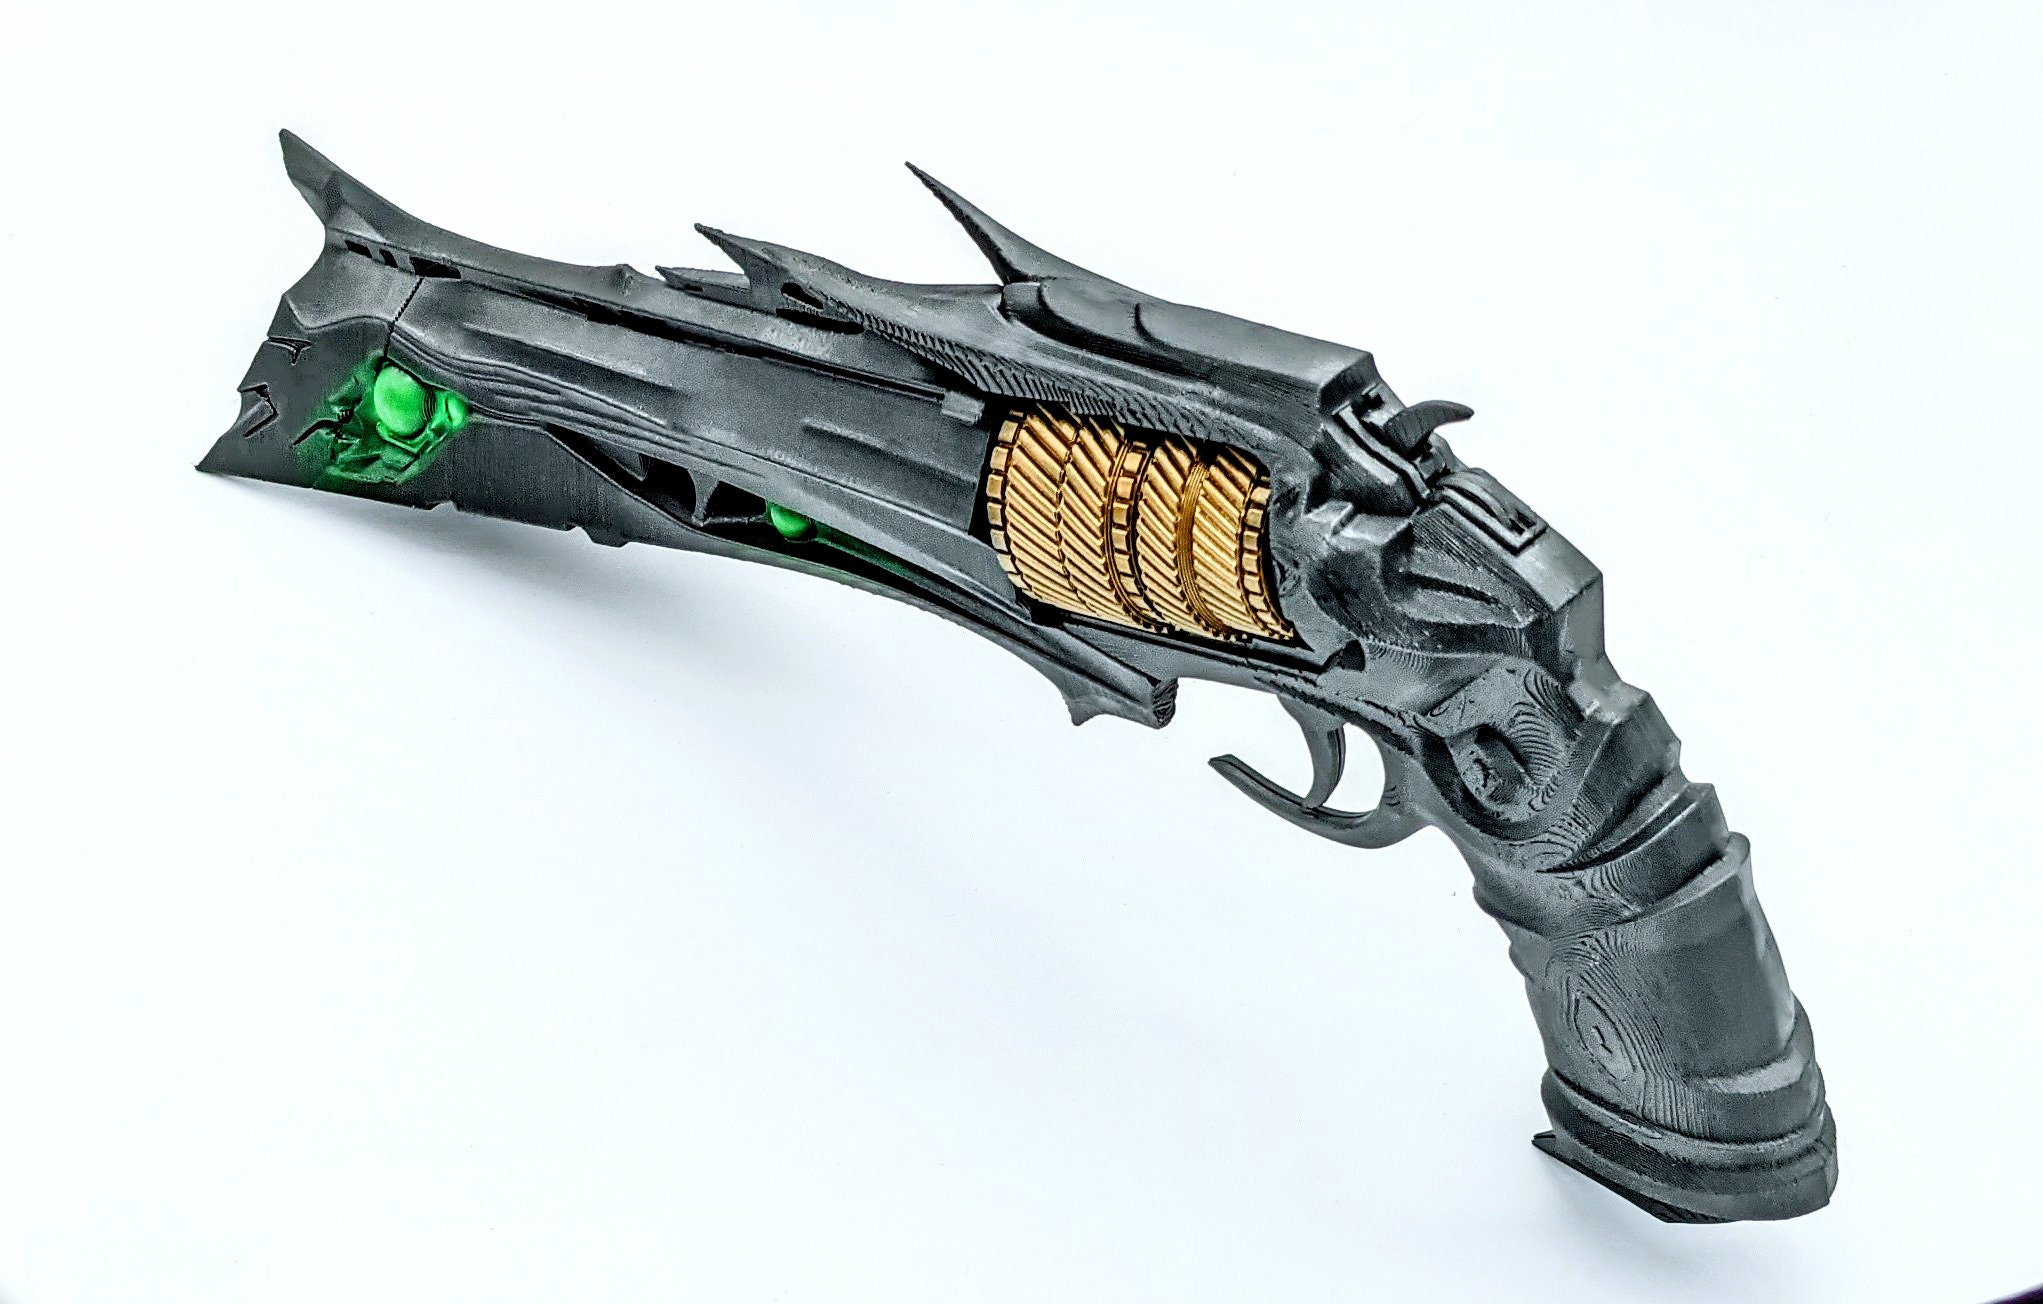 Destiny Thorn Replica 1:1 Hand Cannon 3D Printed Replica | Etsy